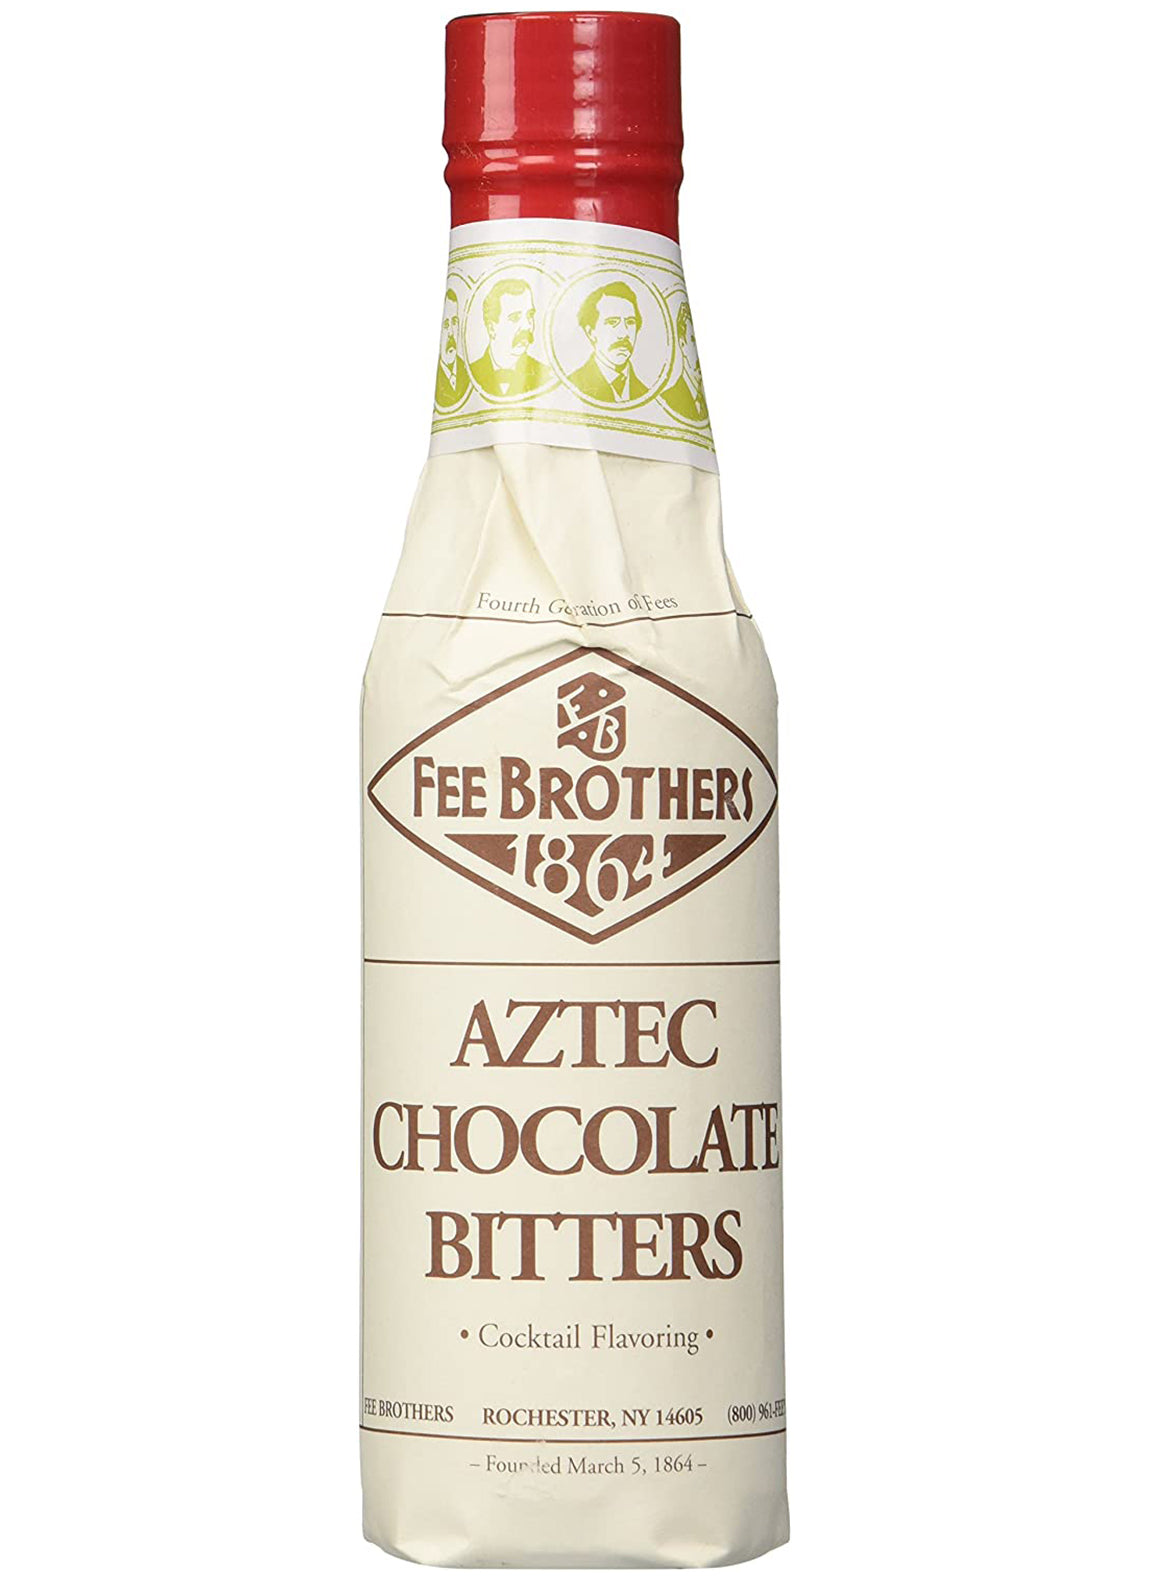 Fee Brothers Aztec Chocolate B